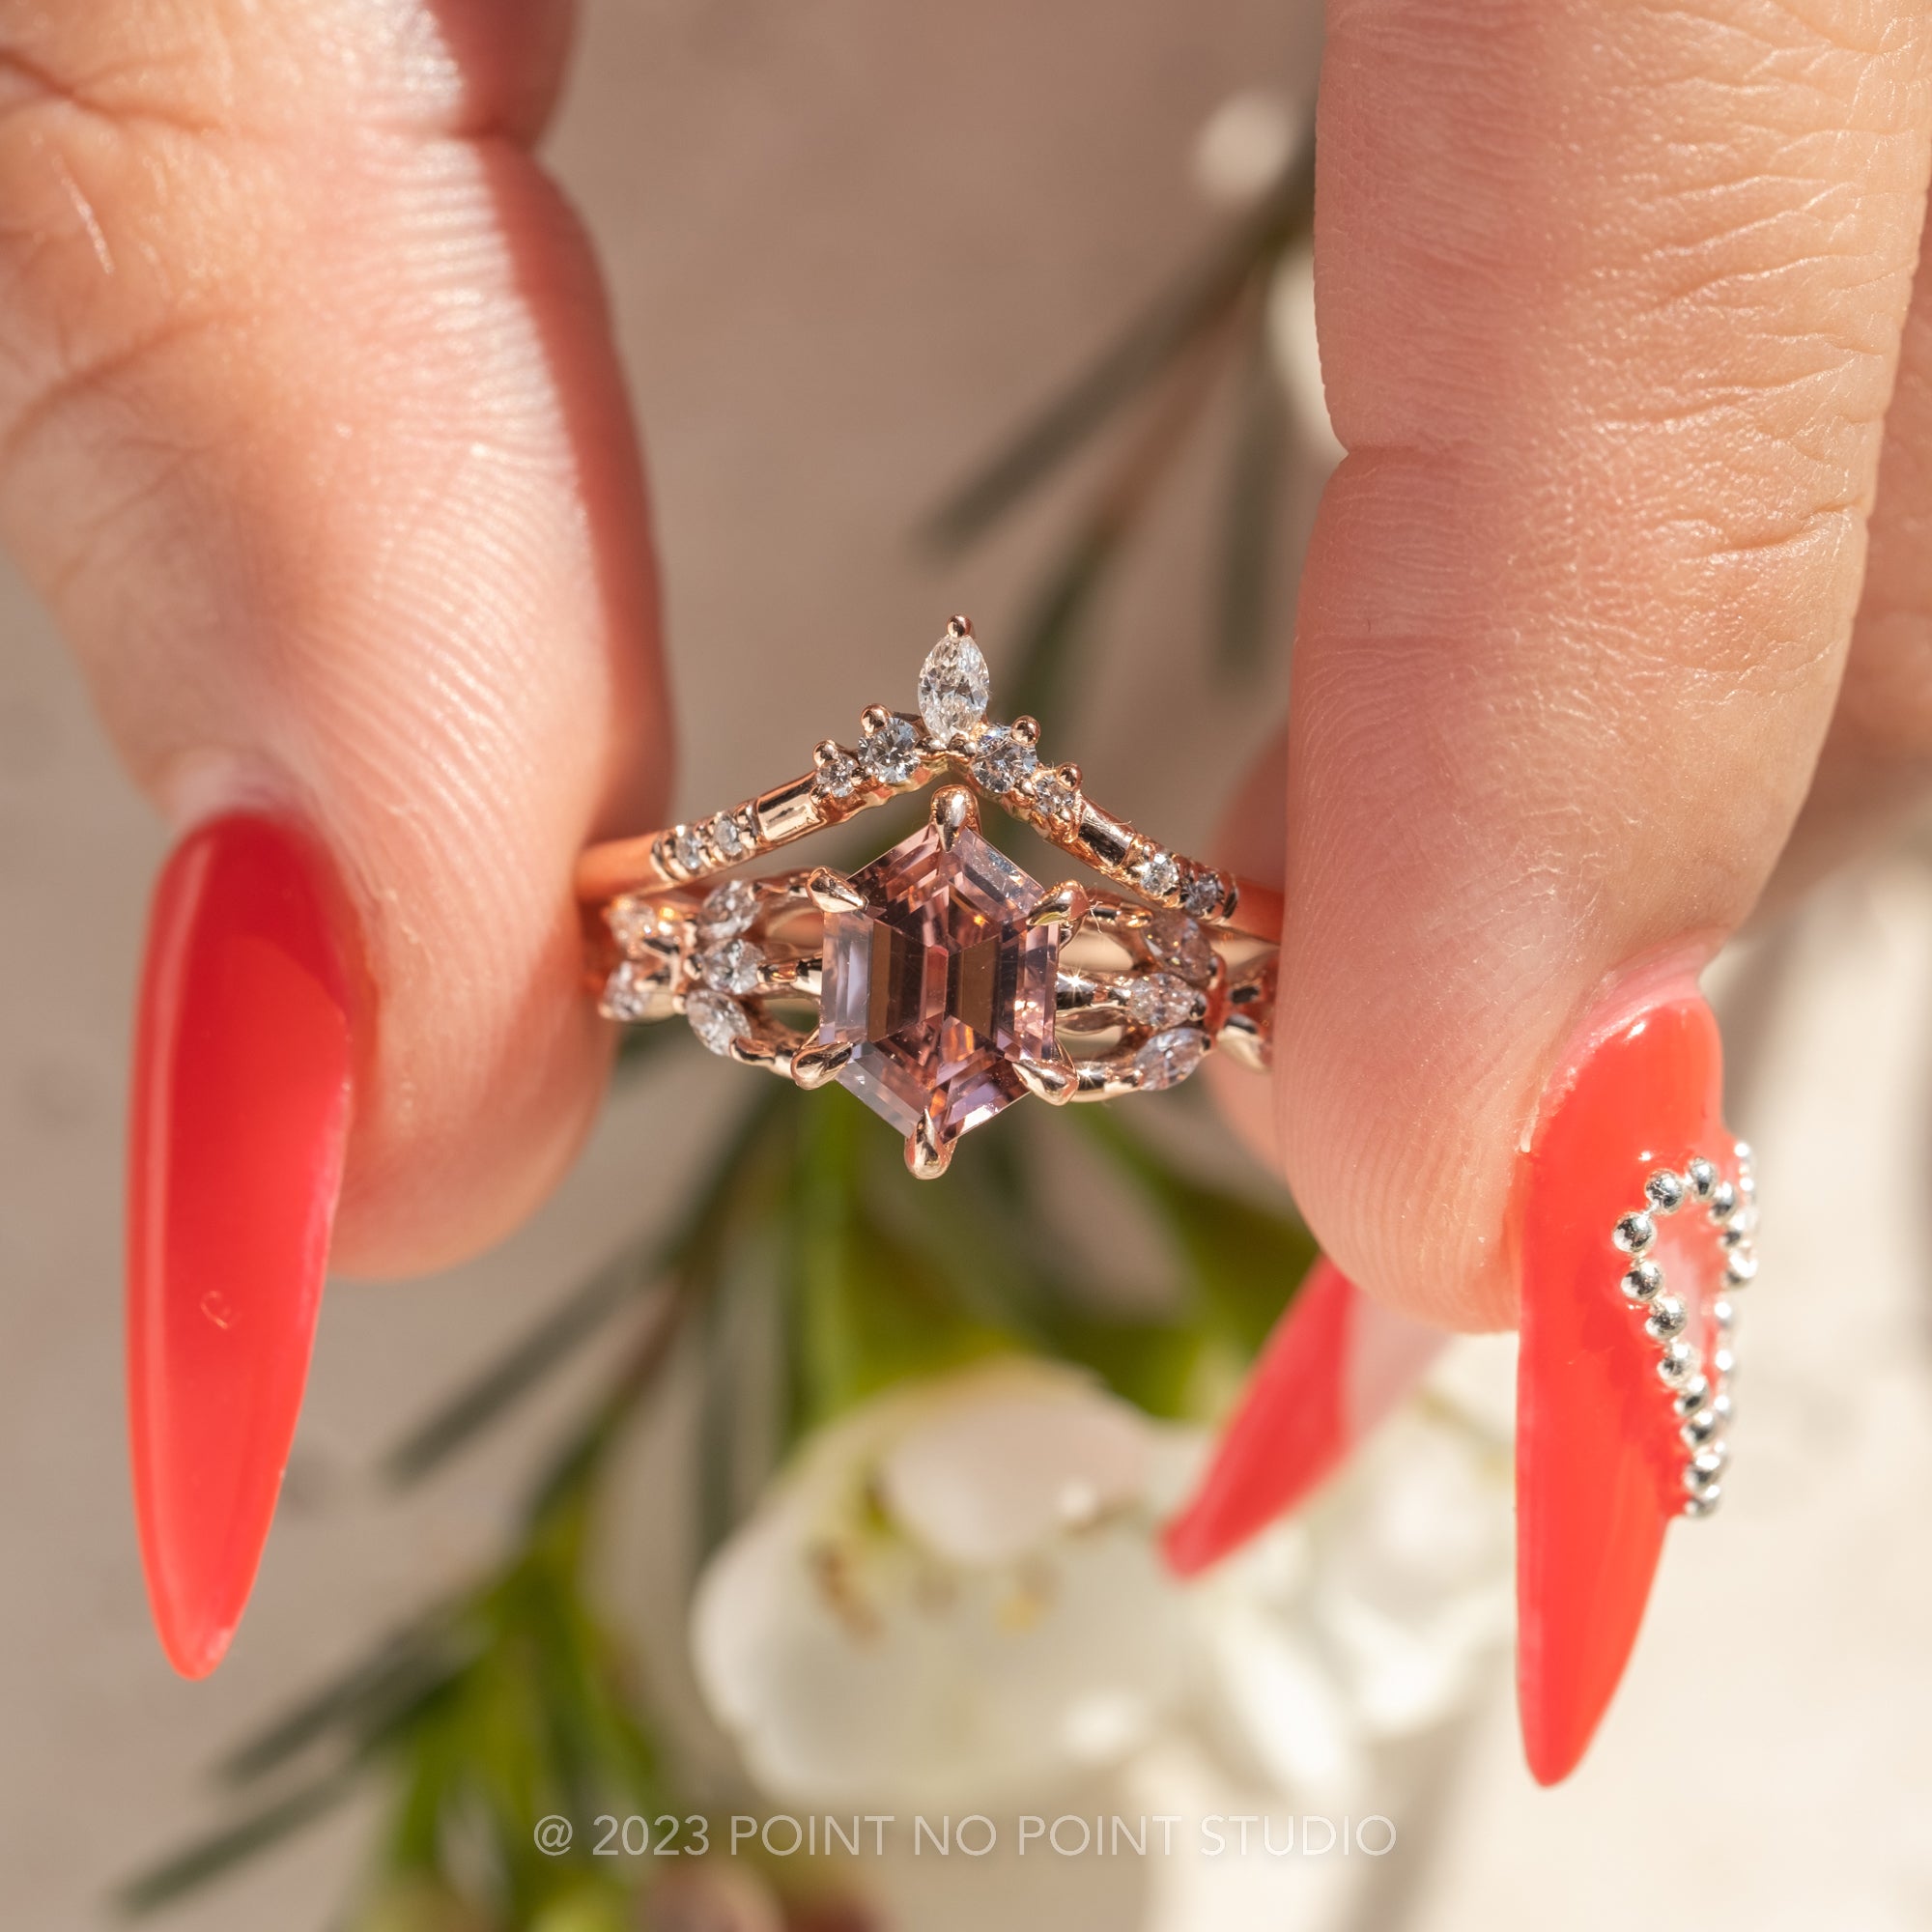 Pink Tourmaline and Diamonds Engagement Ring